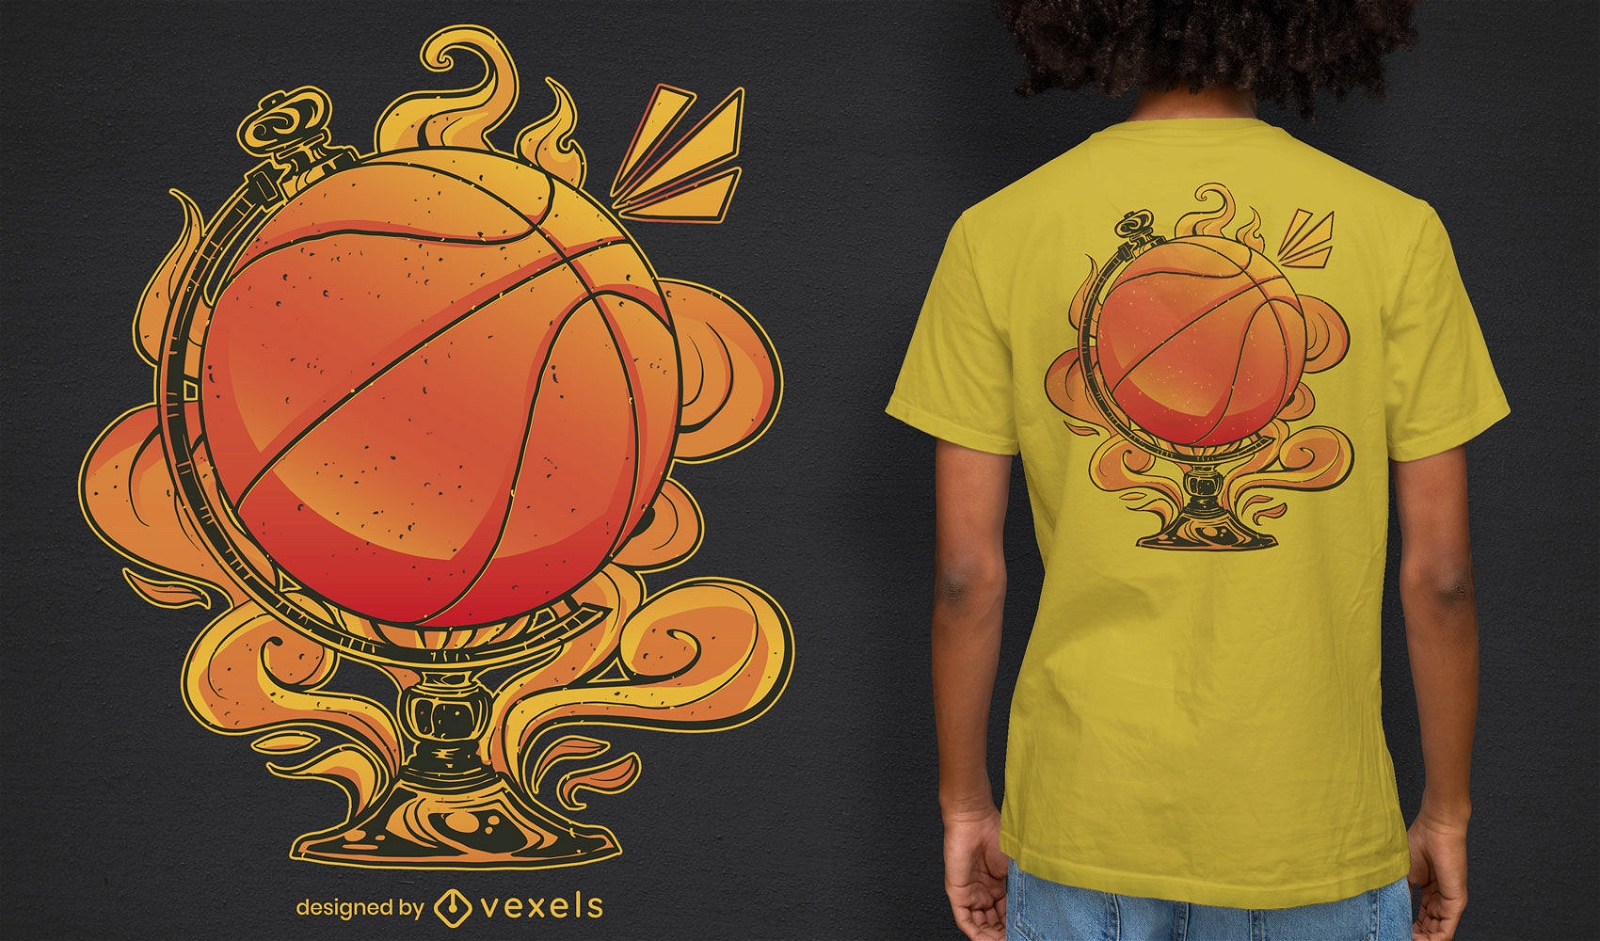 Dise?o de camiseta de globo deportivo de baloncesto.